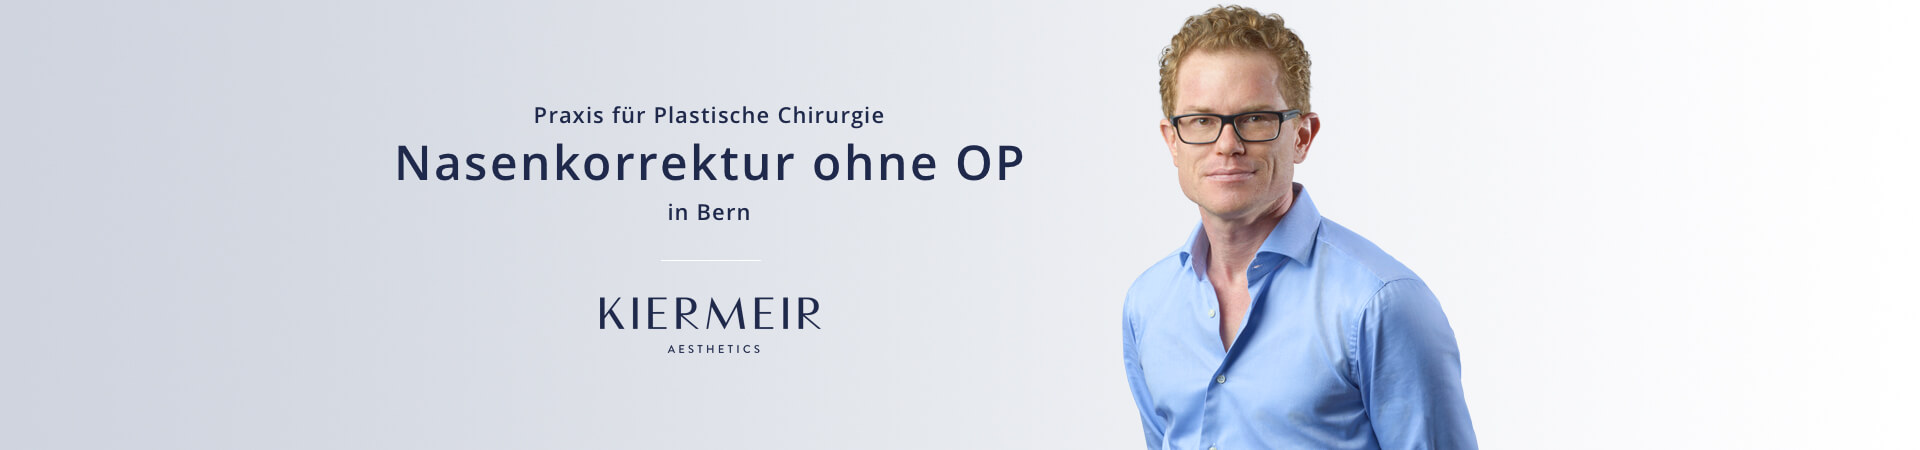 Nasenkorrektur ohne OP in Bern, Dr. Kiermeir 